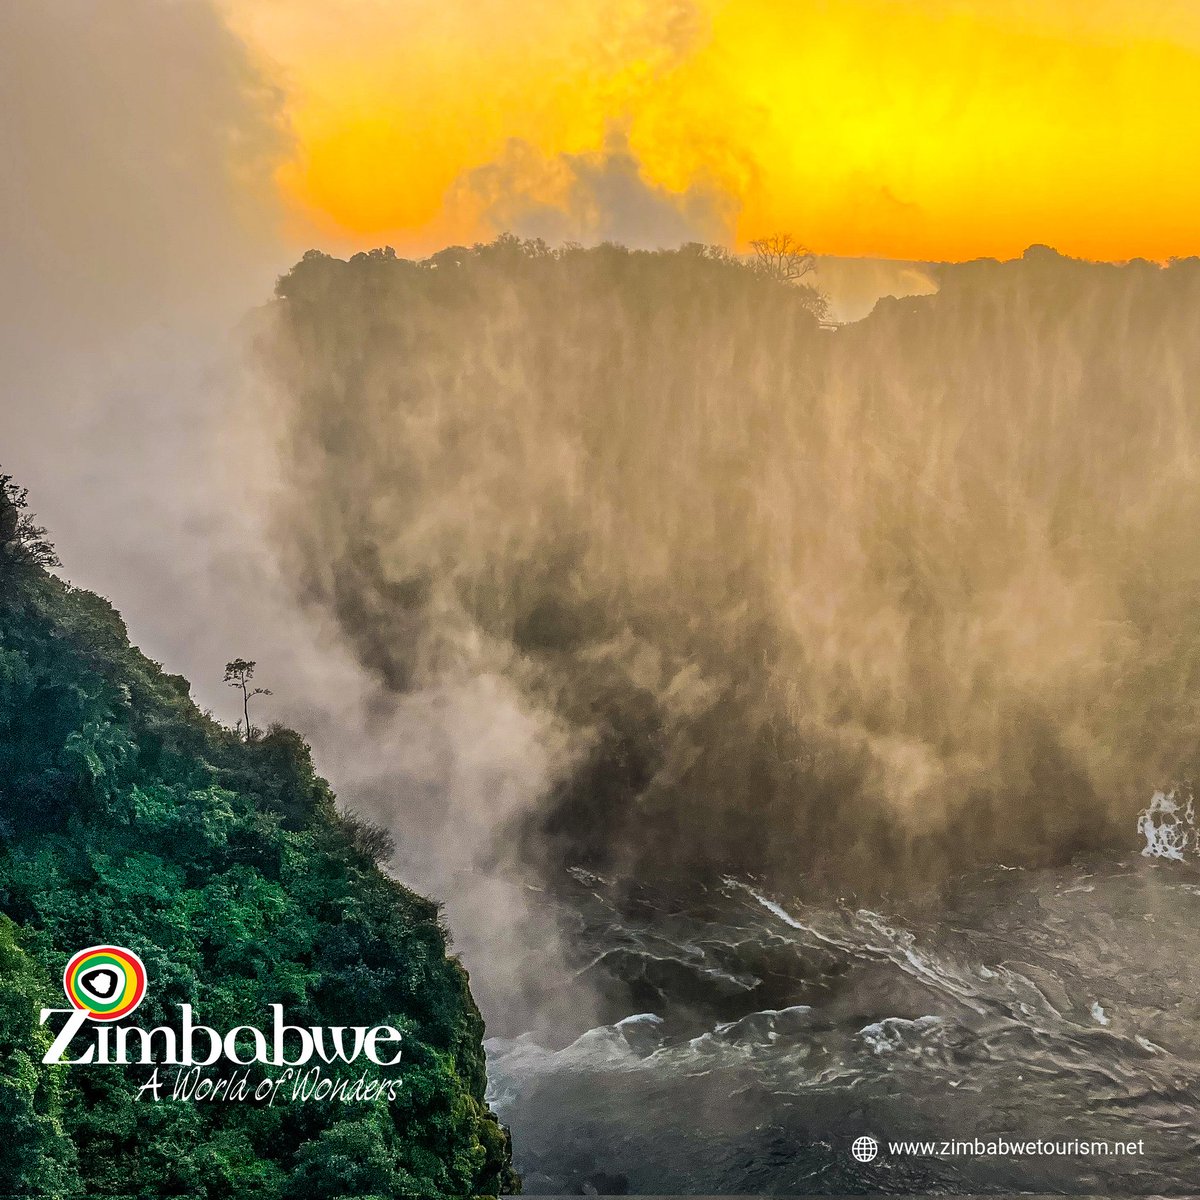 Mosi-Oa-Tunya! The Smoke that Thunders! Victoria Falls! 
#VisitZimbabwe 
#AWorldofWonders